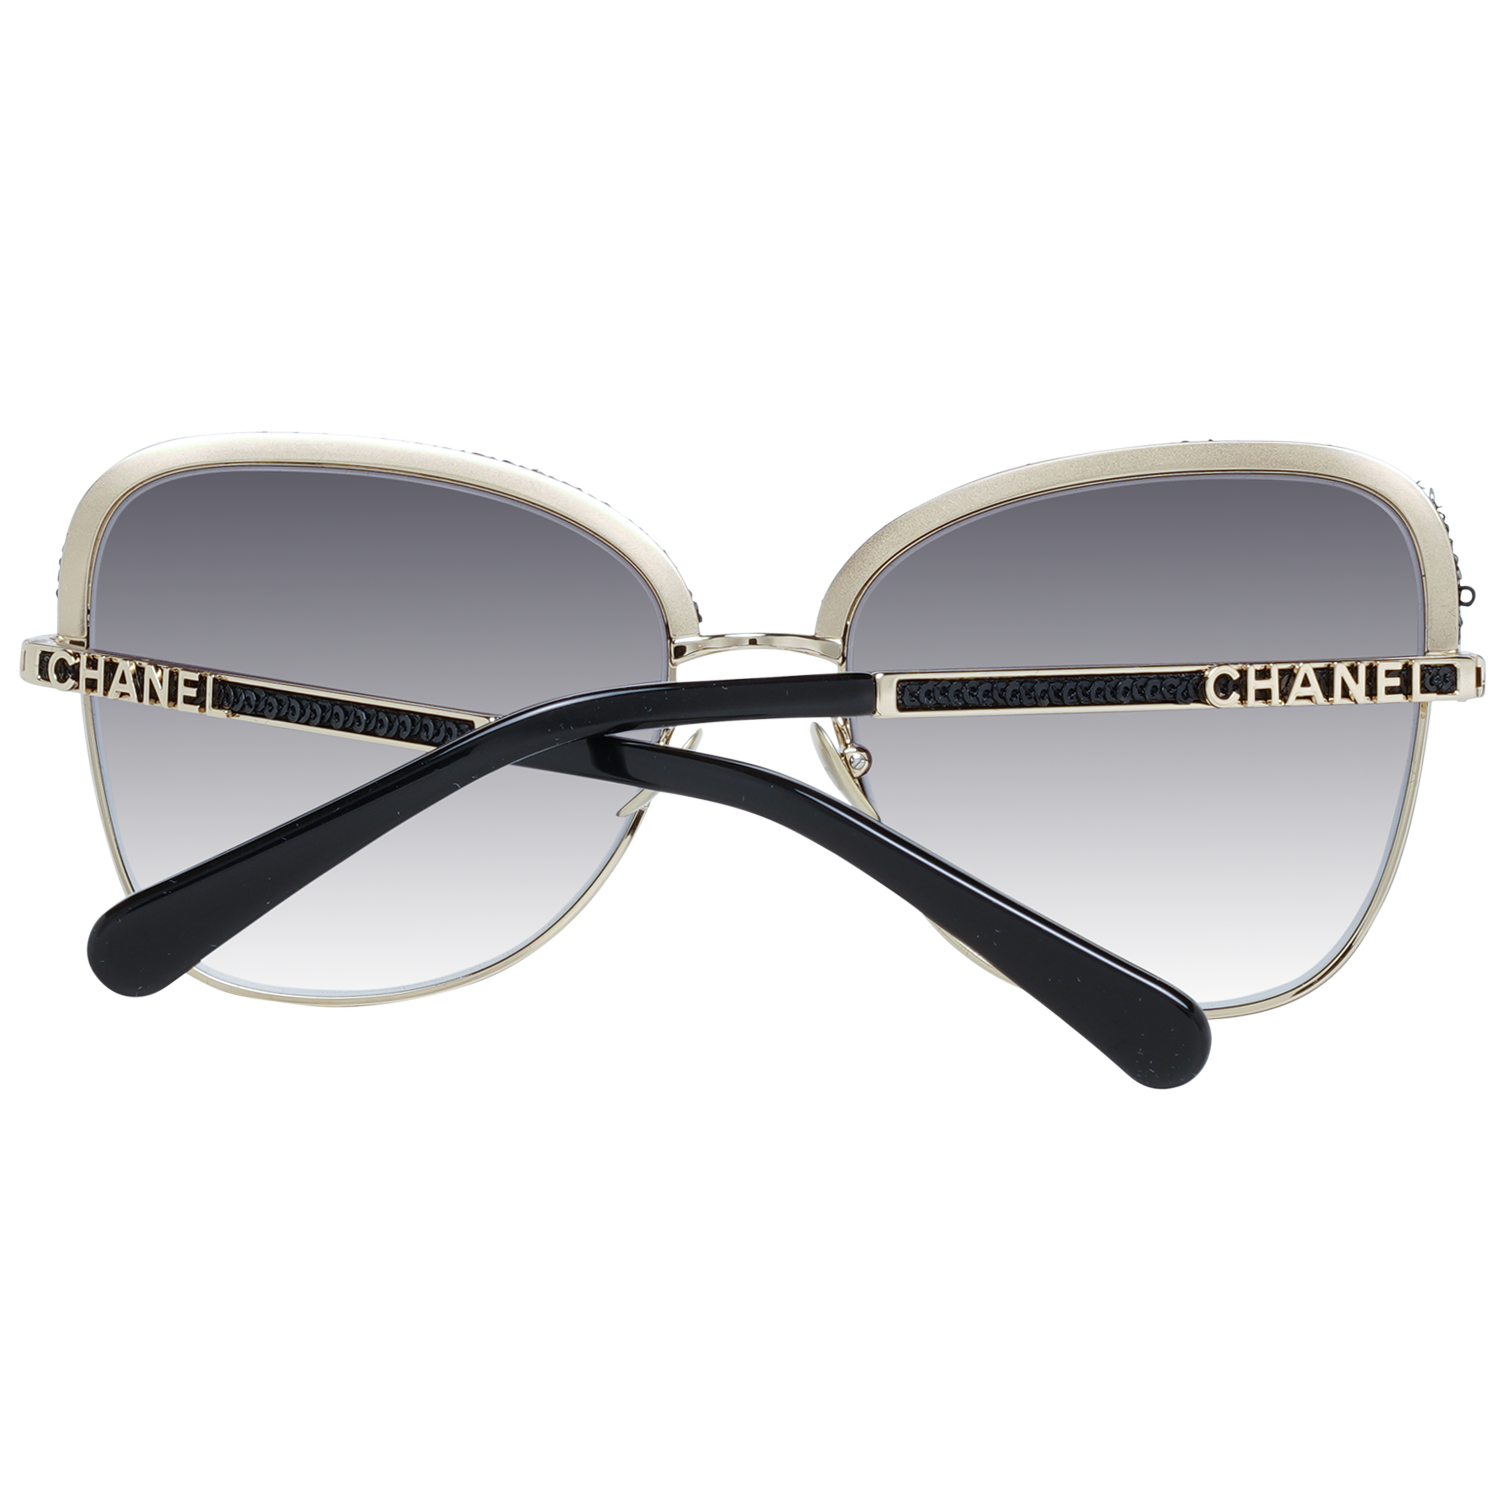 Chanel  Sunglasses Fashion sunglasses Fashion